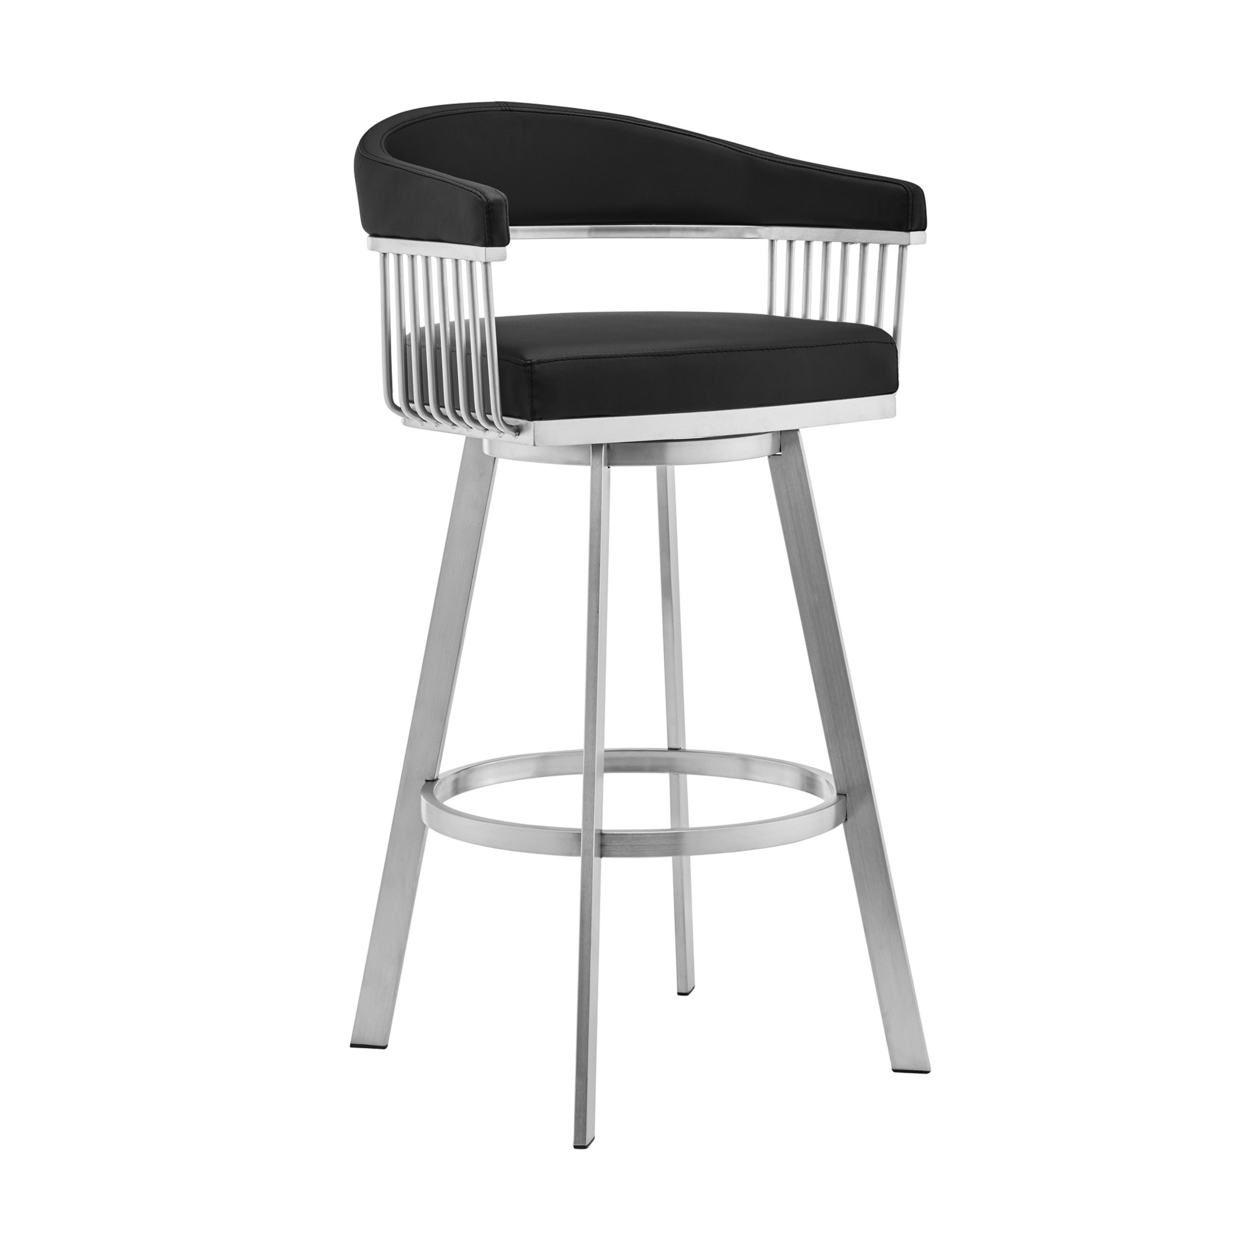 Lif 29 Inch Swivel Barstool Chair, Slatted Arms, Steel, Black Faux Leather- Saltoro Sherpi